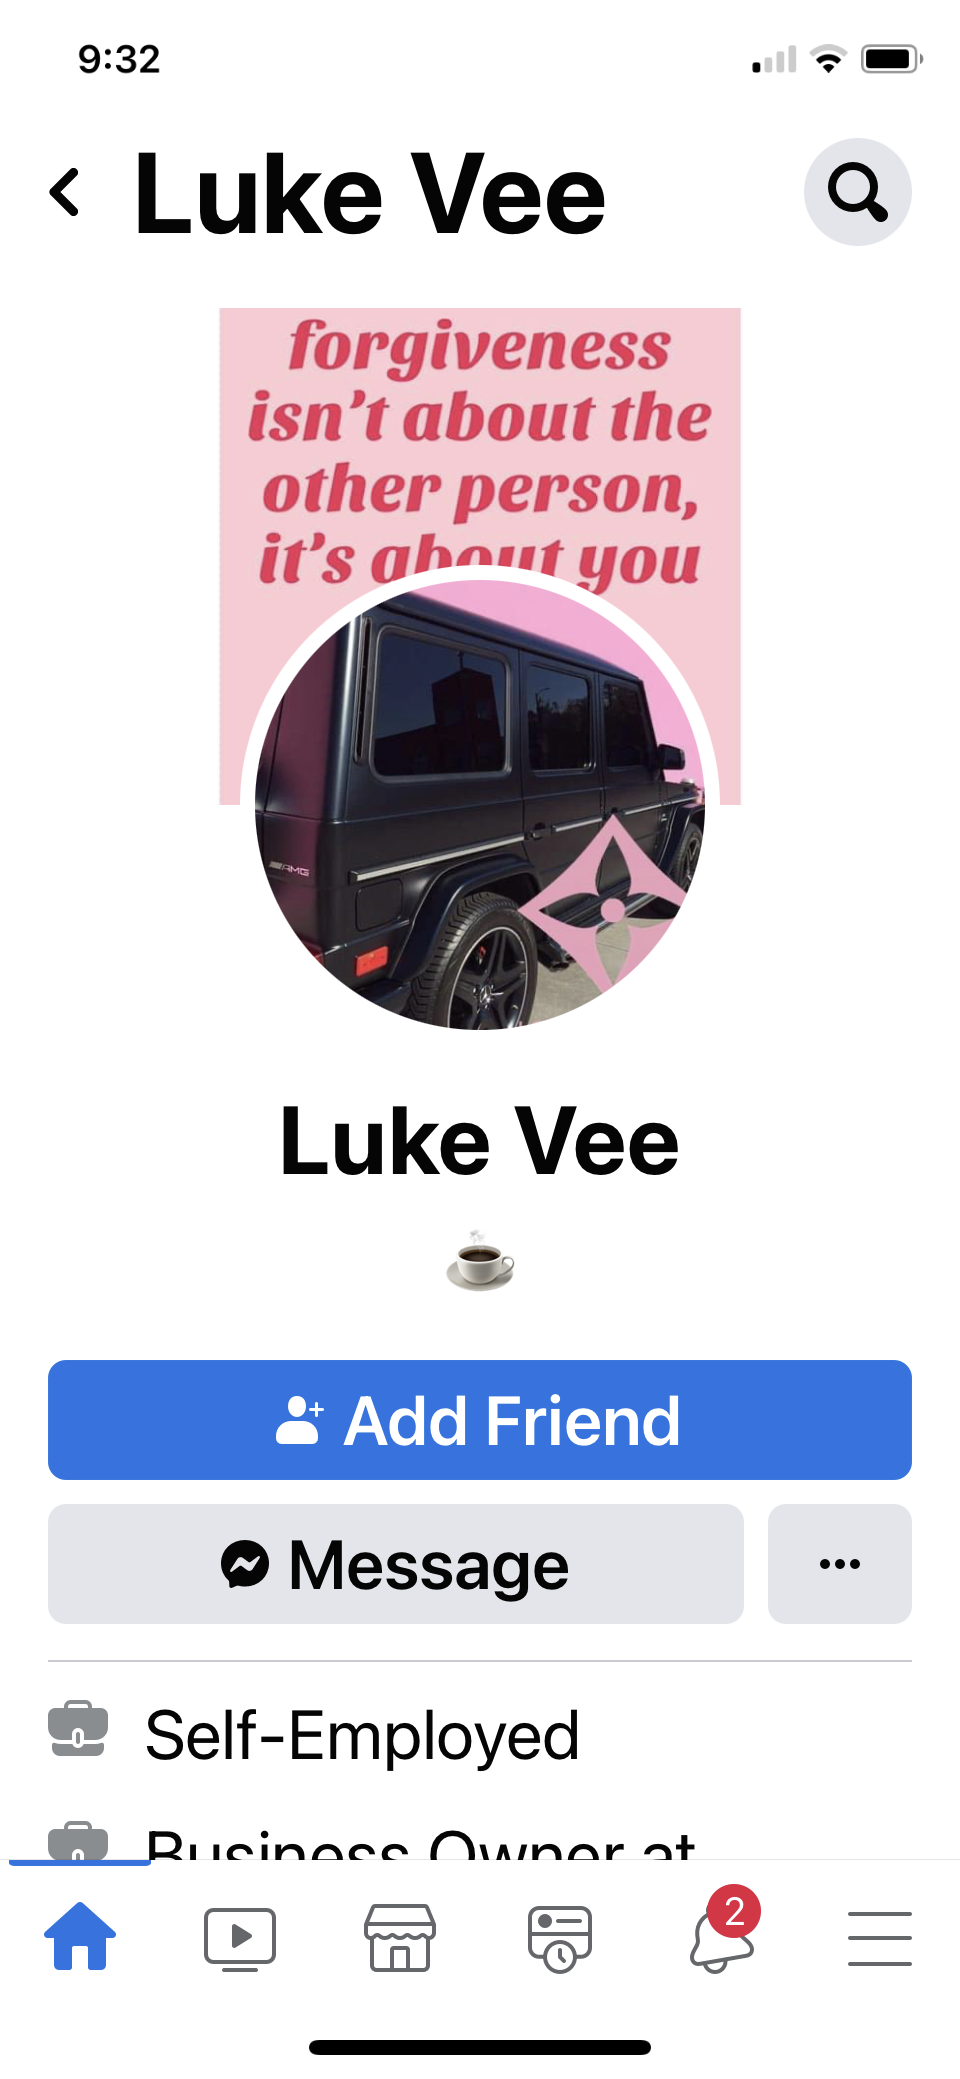 Luke Facebook page